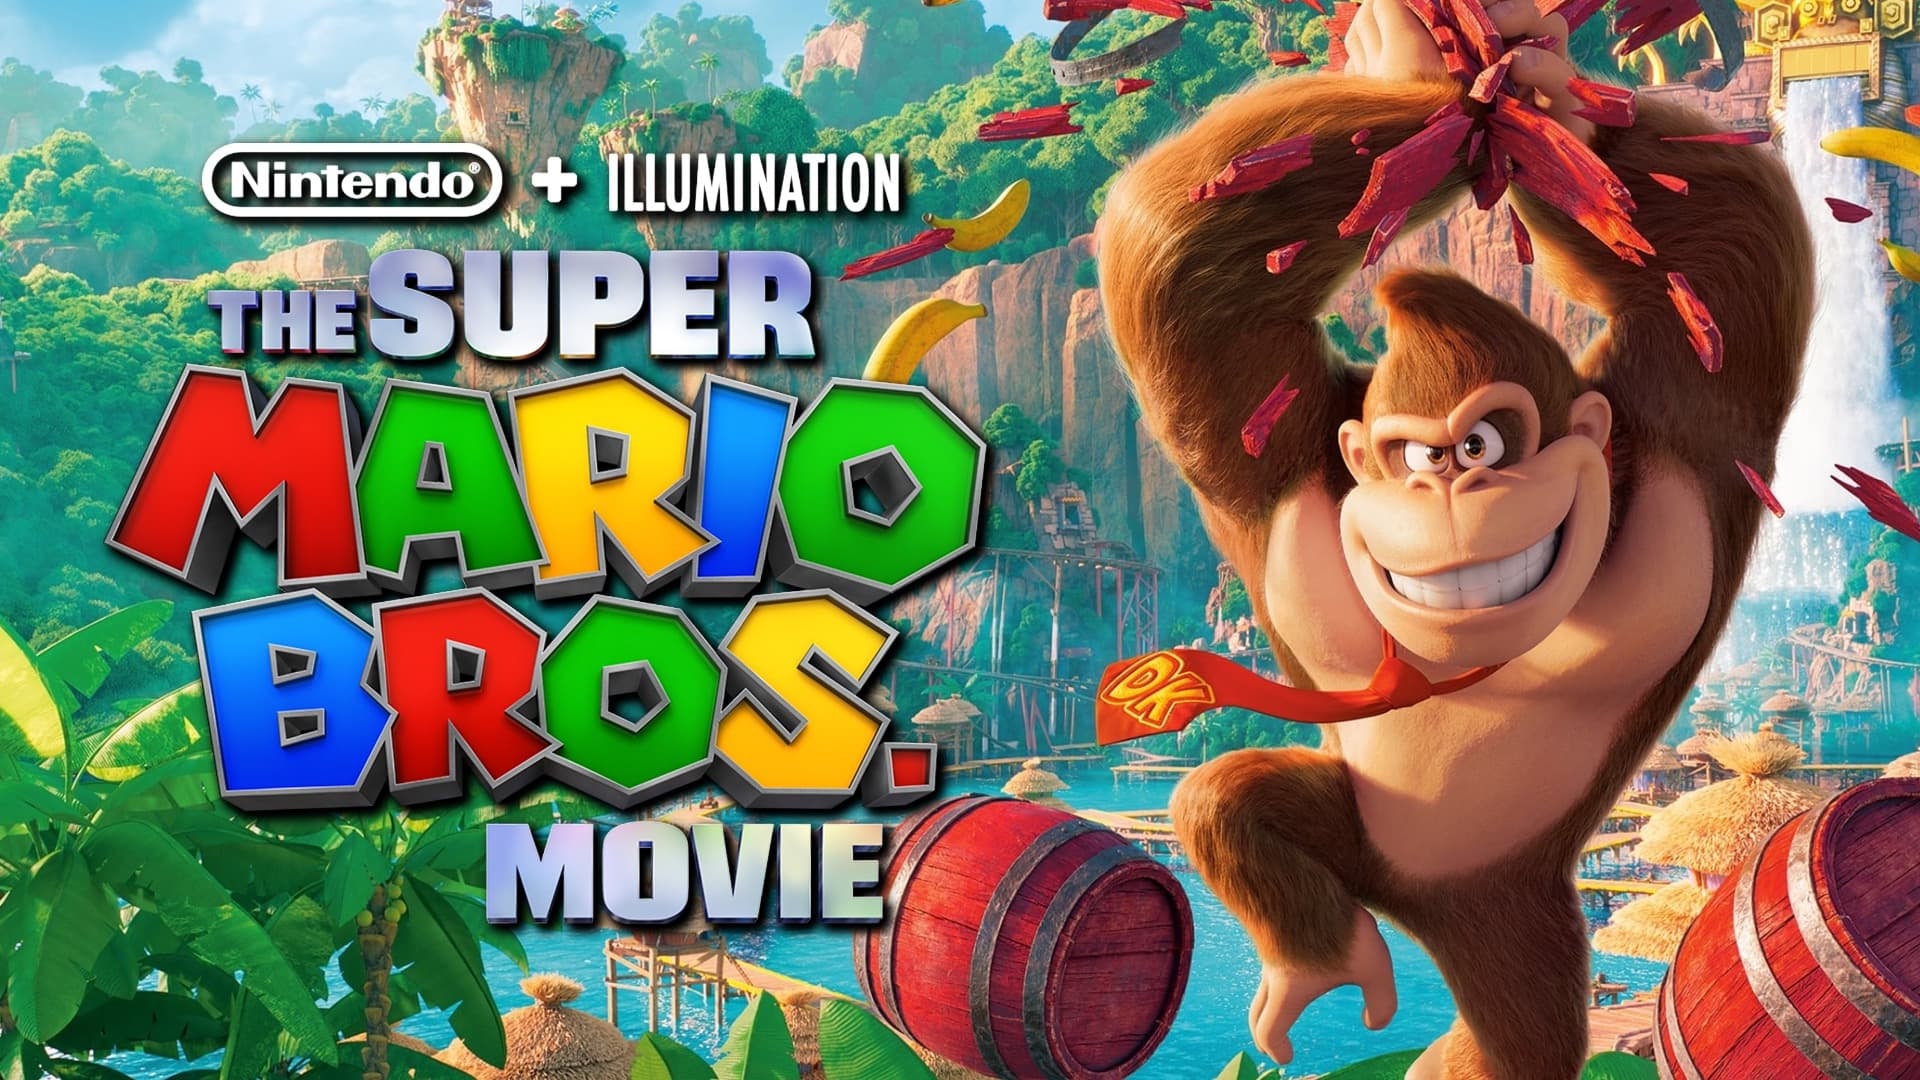 Süper Mario Kardeşler Filmi (2023)